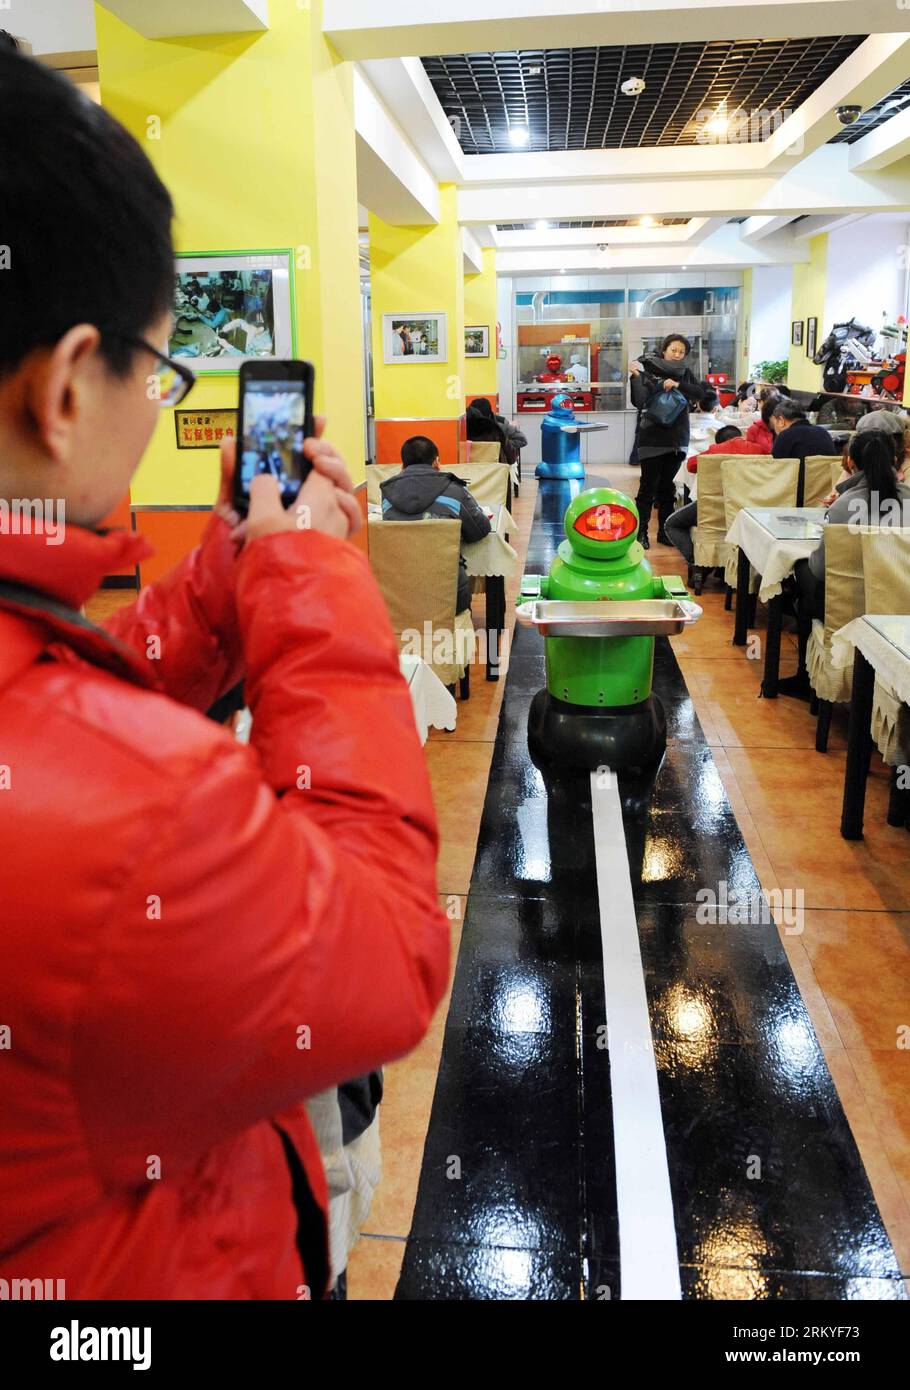 Bildnummer: 59214297  Datum: 13.02.2013  Copyright: imago/Xinhua (130213) -- HARBIN, Feb. 13, 2013 (Xinhua) -- A consumer takes a photo of a robot waiter in a restaurant in Harbin, capital of northeast China s Heilongjiang Province, Feb. 13, 2013. The restaurant, offering service by 20 robots, started operating on Wednesday, attracting many consumers. (Xinhua/Wang Jianwei) (hdt) CHINA-HARBIN-RESTAURANT-ROBOT (CN) PUBLICATIONxNOTxINxCHN Gesellschaft Gastronomie Erlebnisgastronomie kurio Komik Roboter Kellner Fotostory premiumd x0x xac 2013 hoch      59214297 Date 13 02 2013 Copyright Imago XINH Stock Photo